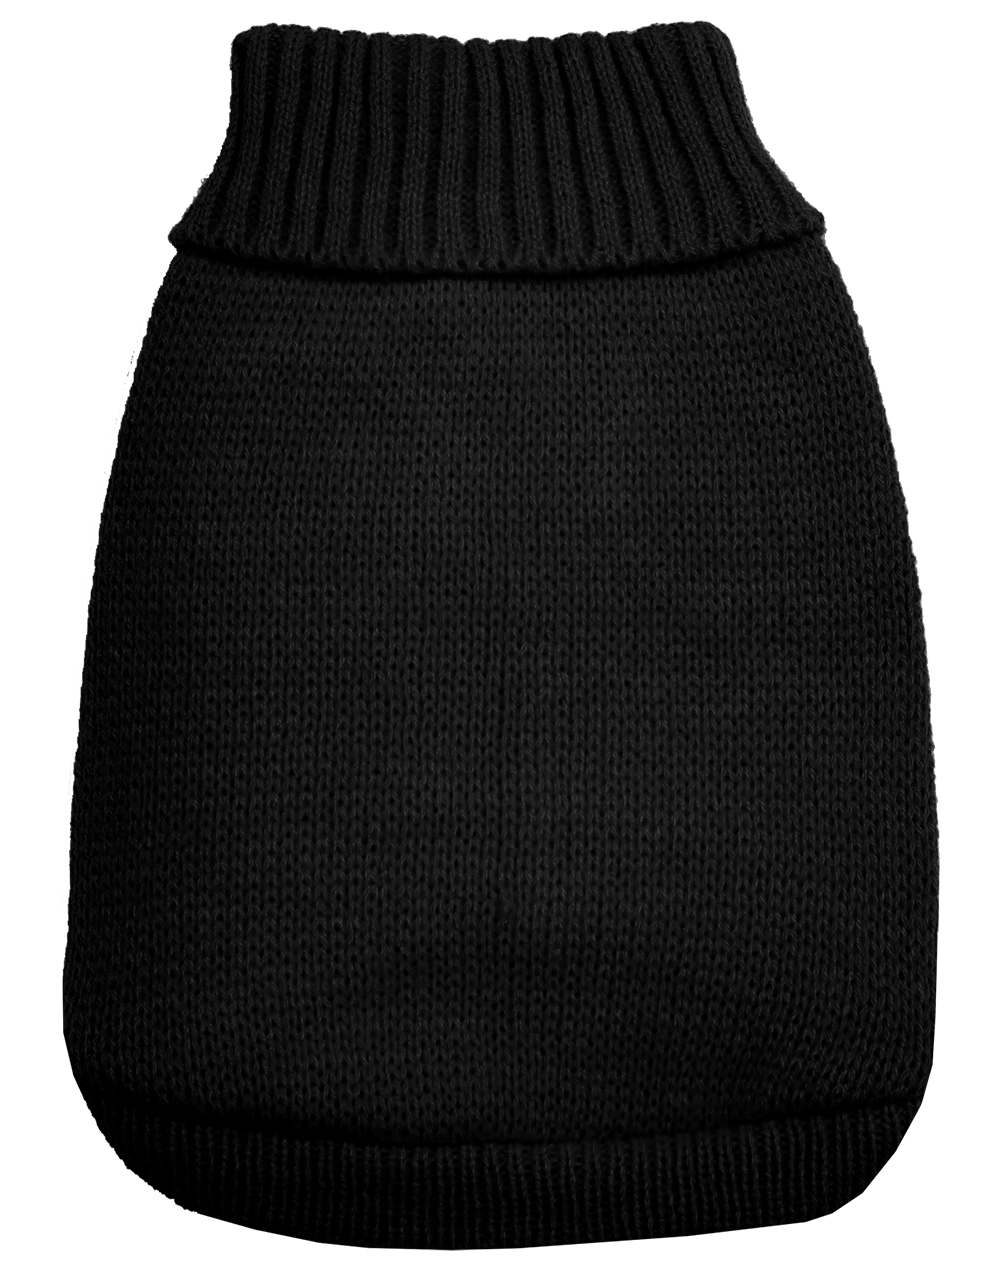 Knit Pet Sweater Black Size XL